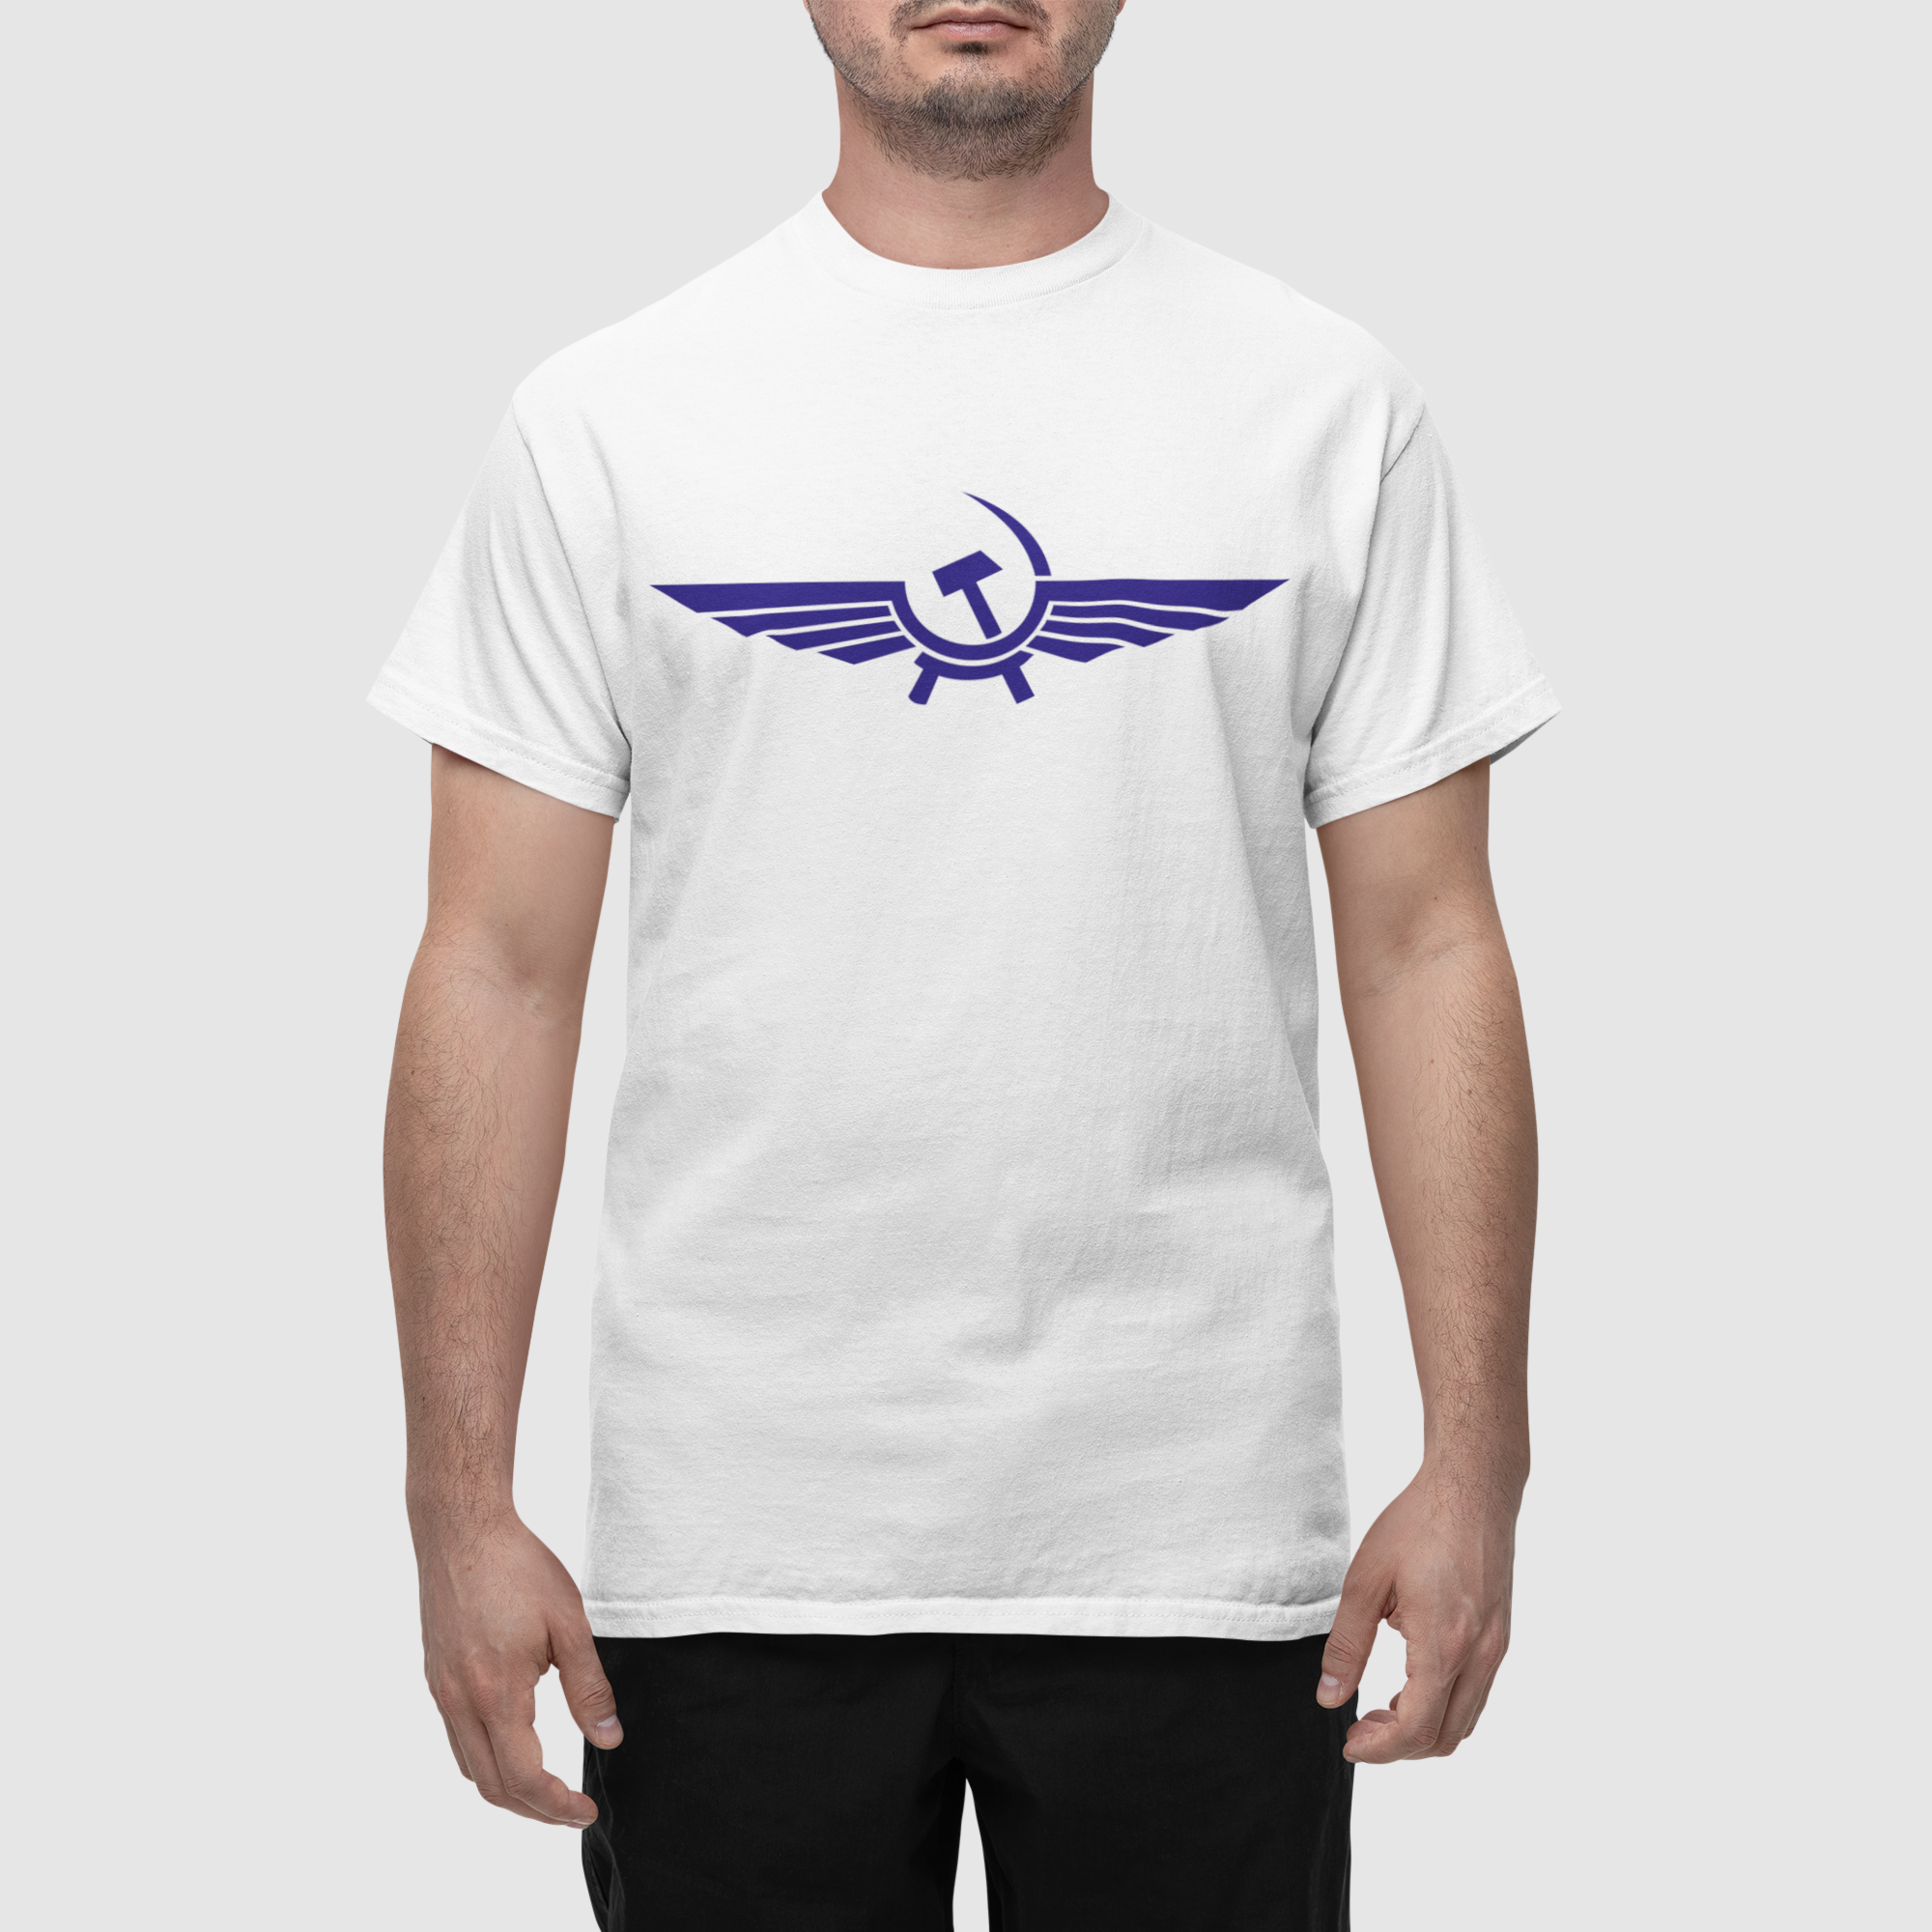 Aeroflot T Shirt - Classic Logo